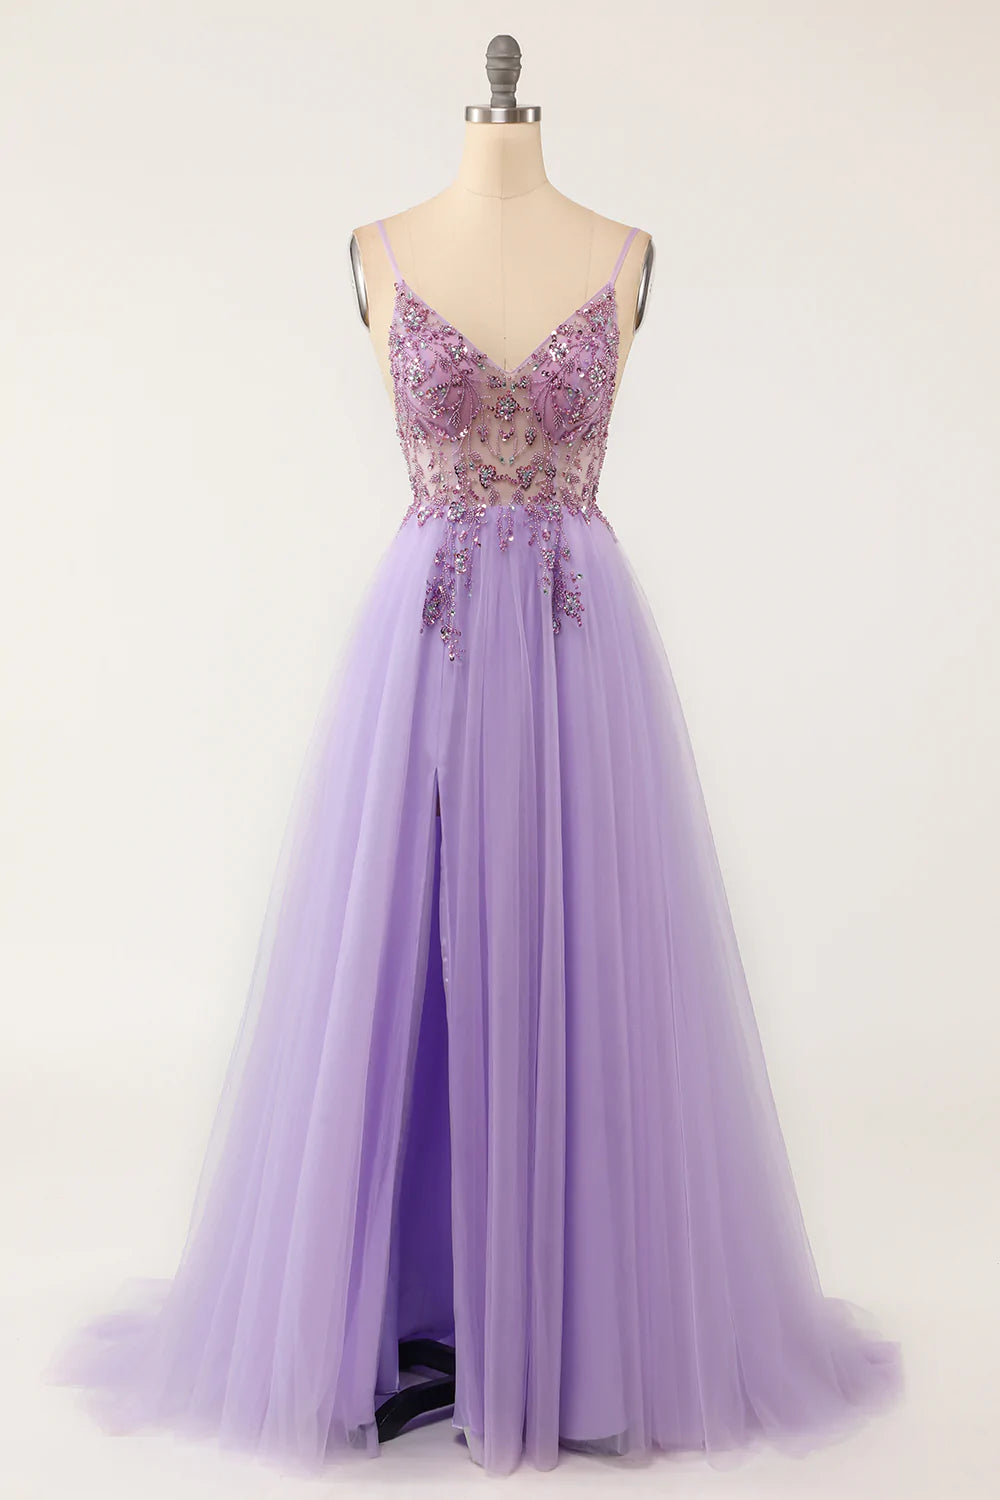 Zapakasa Women Purple Long Prom Dress A Line Spaghetti Straps Tulle Beaded Formal Dress